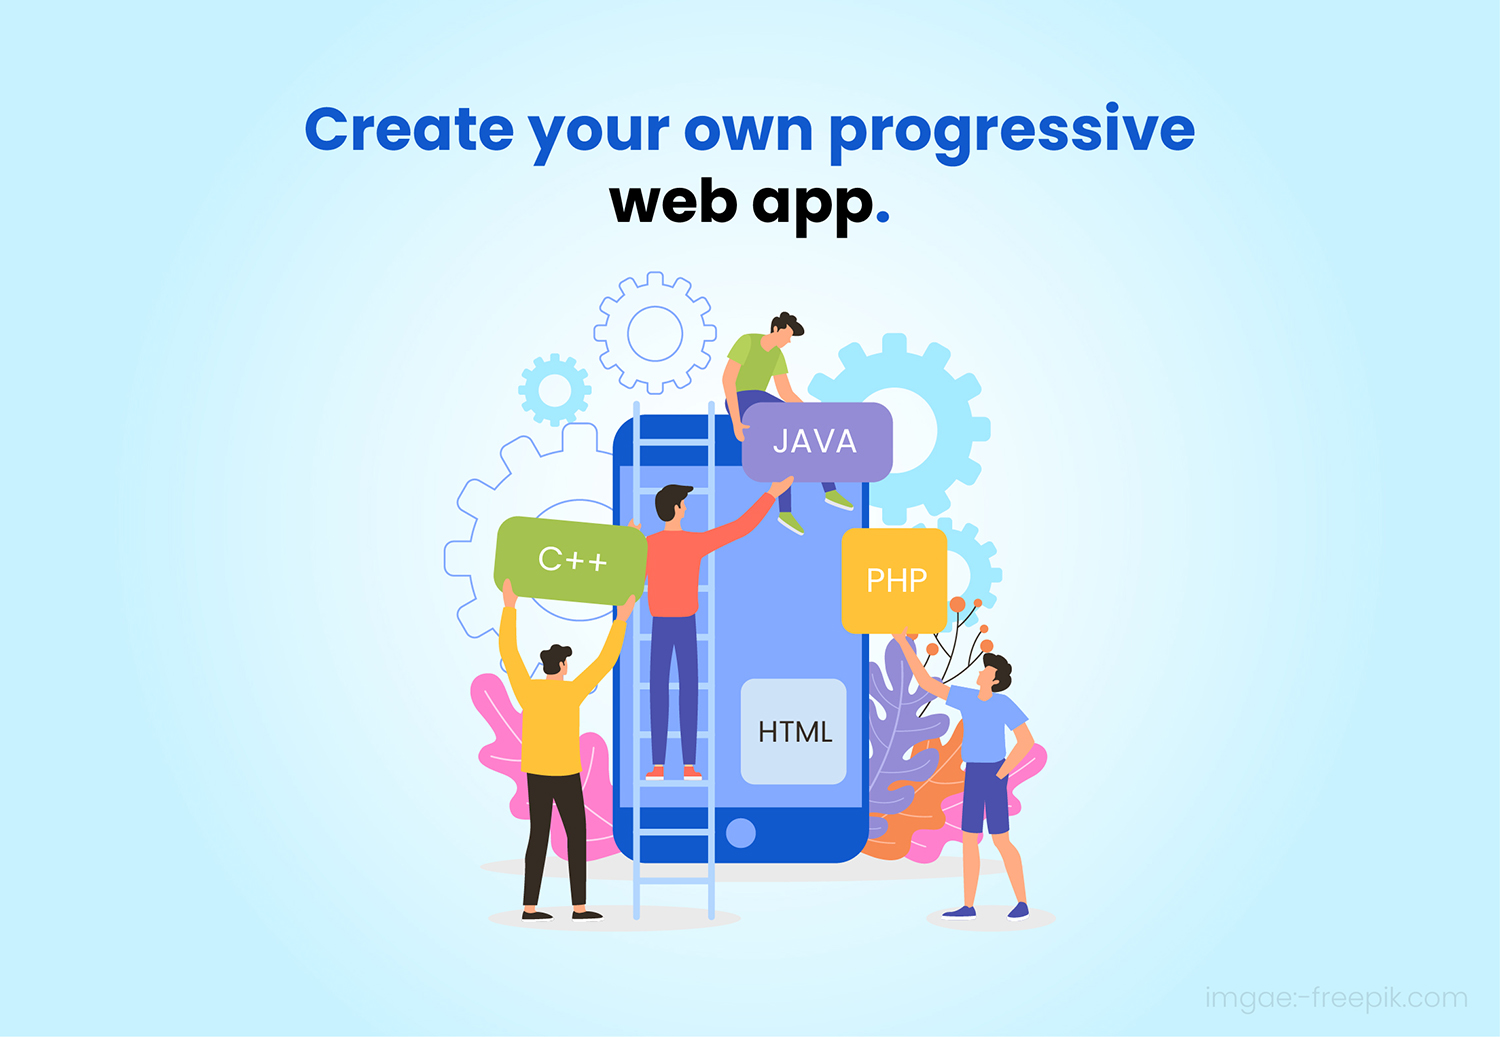 Building Progressive Web Apps (PWA) with PHP